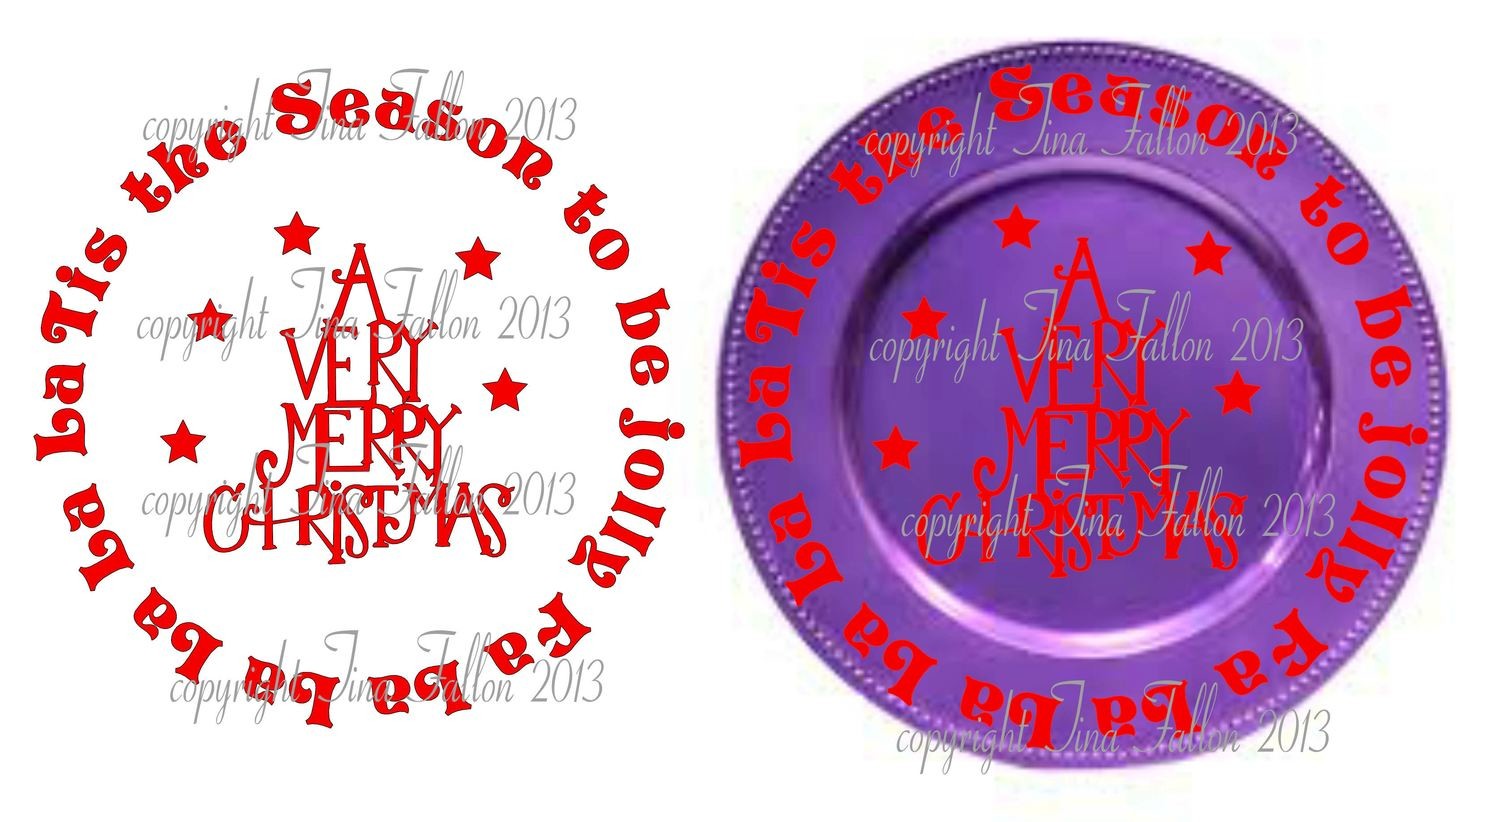 Tis The Season Vinyl design for Christmas charger plates